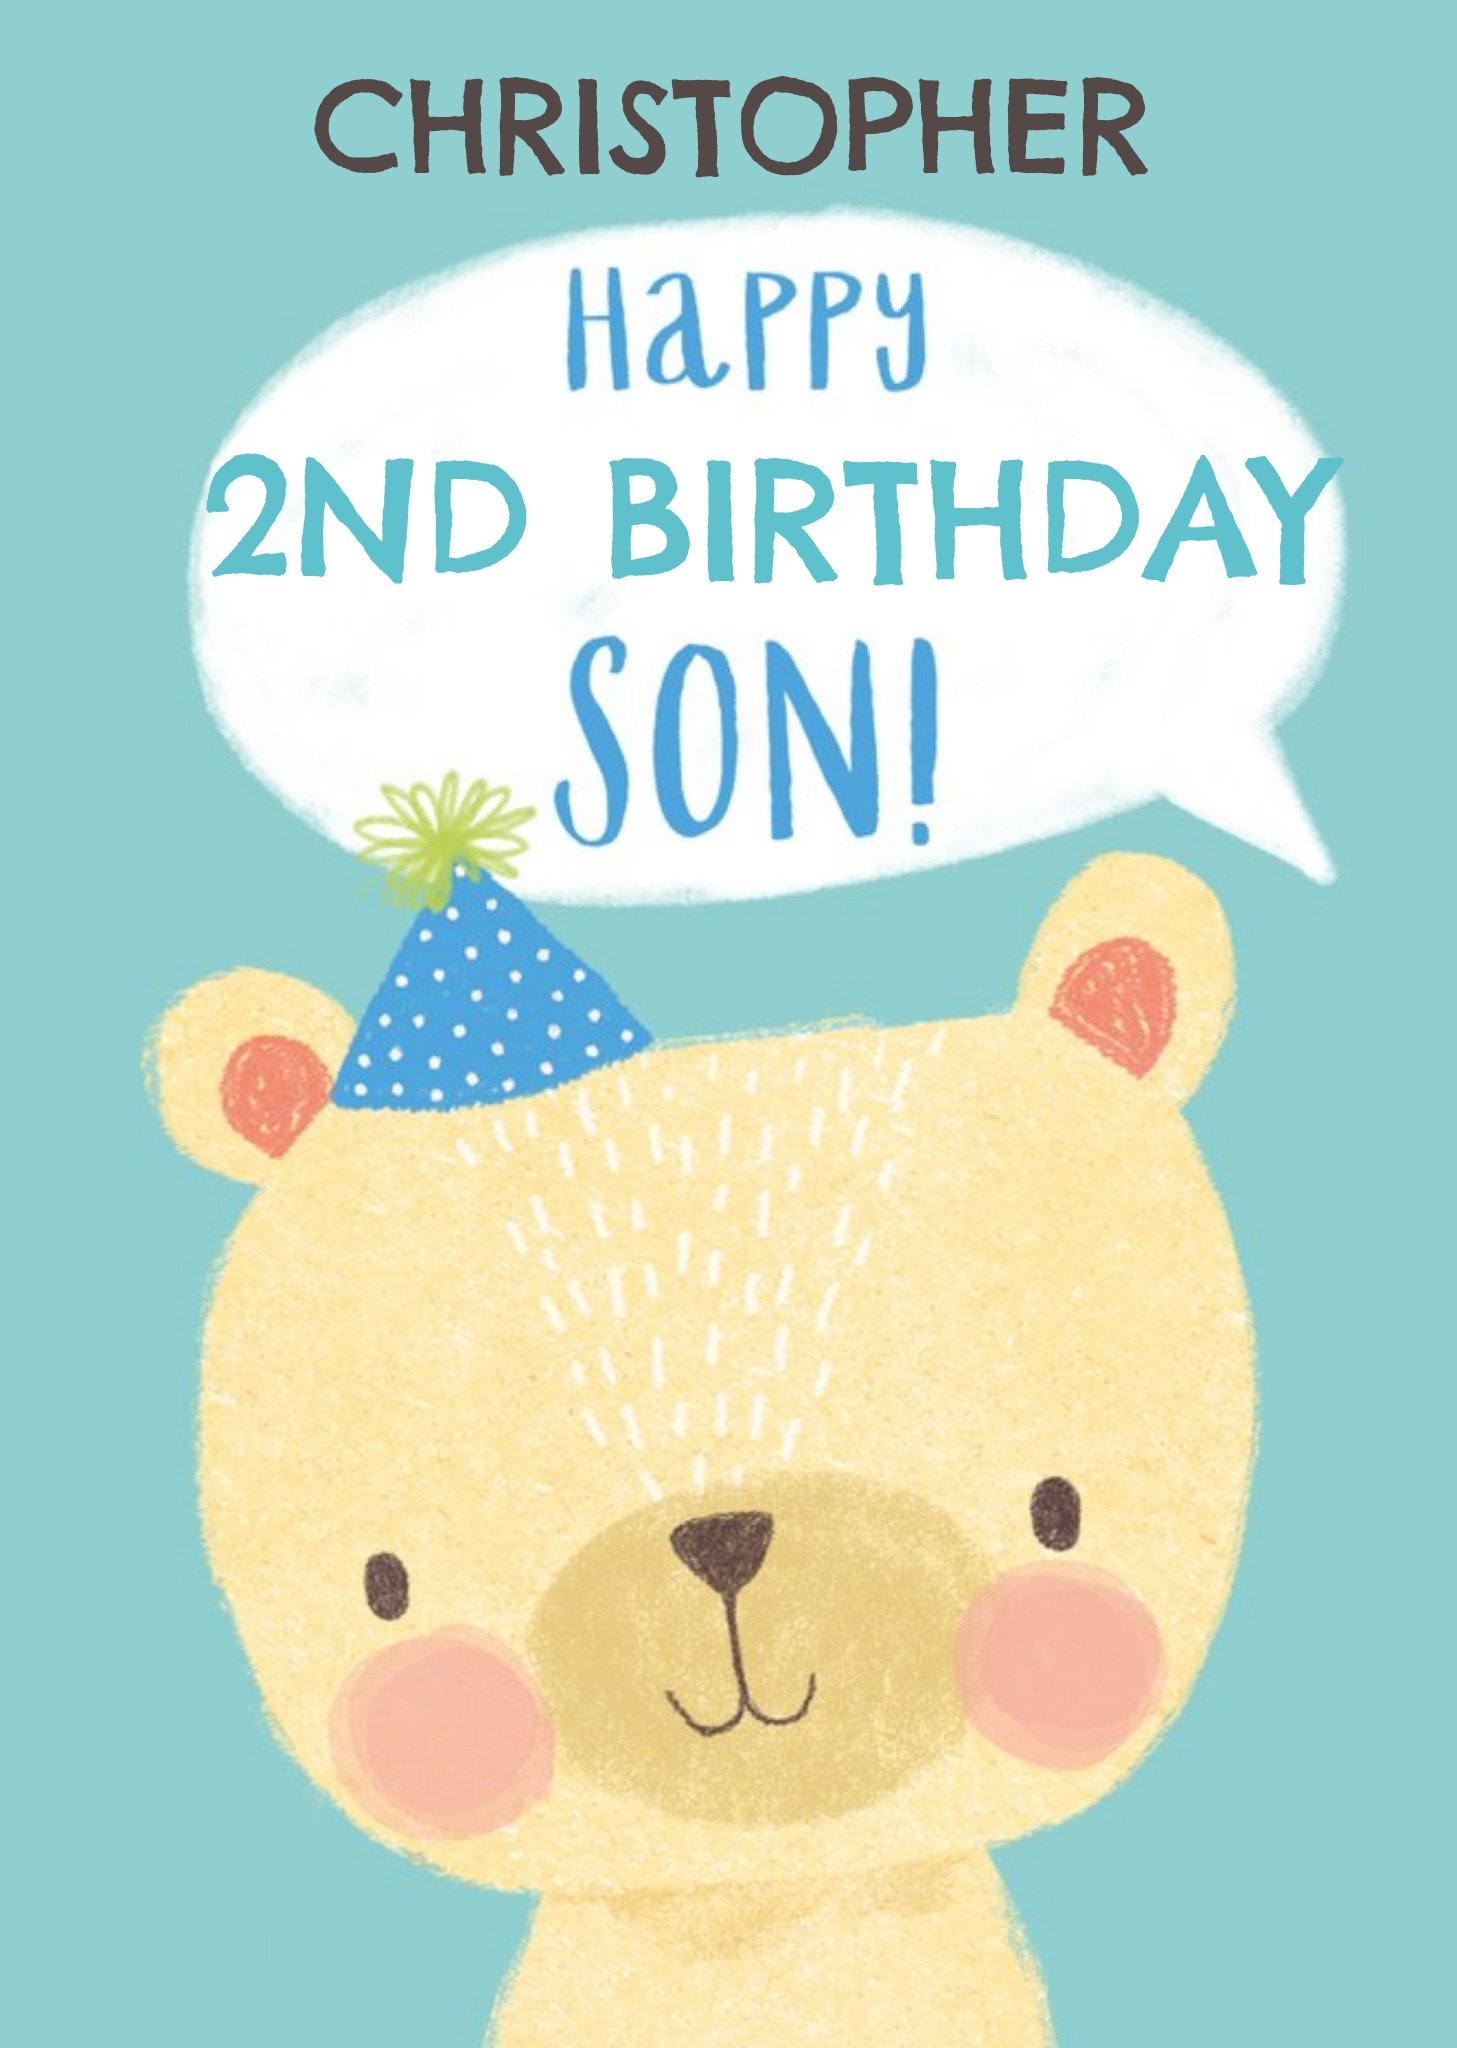 Moonpig Cute Simple Illustration Of A Teddy Bear Happy 2nd Birthday Son Card, Large